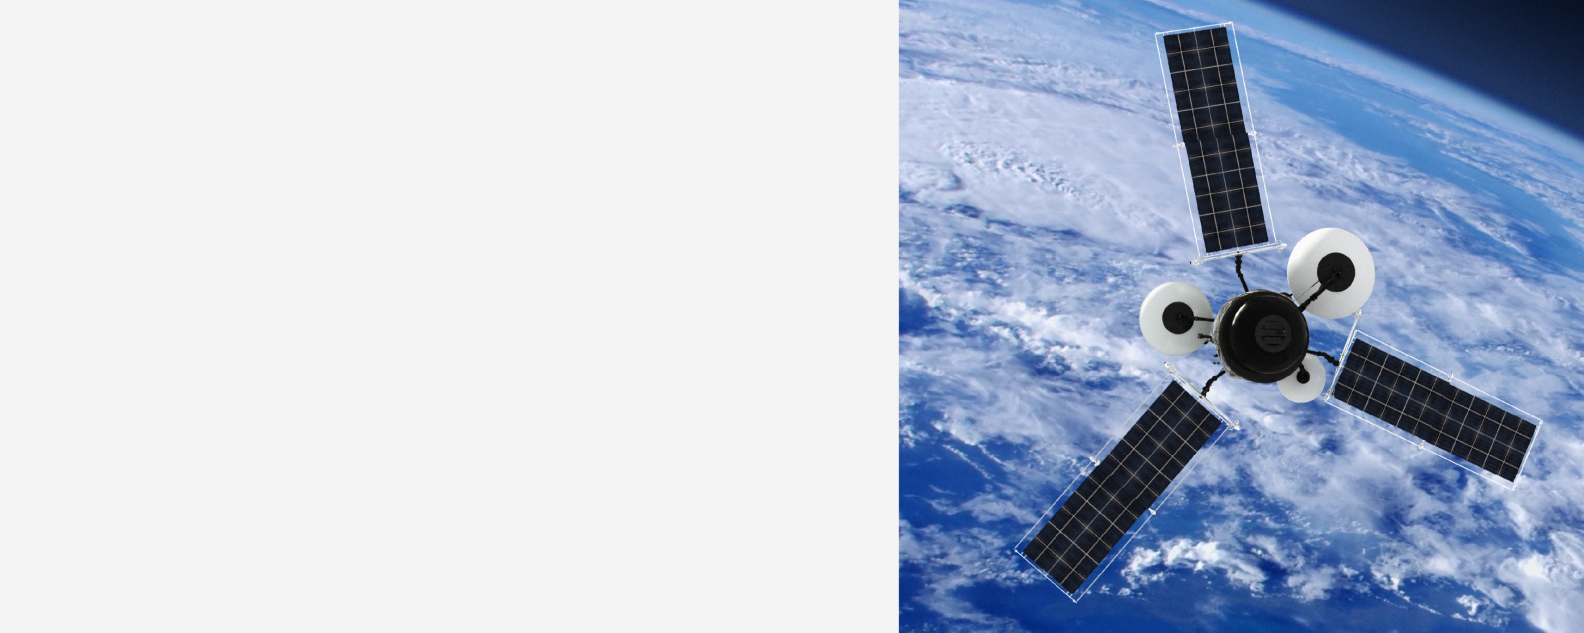 GPS or Weather Satellite orbiting Earth